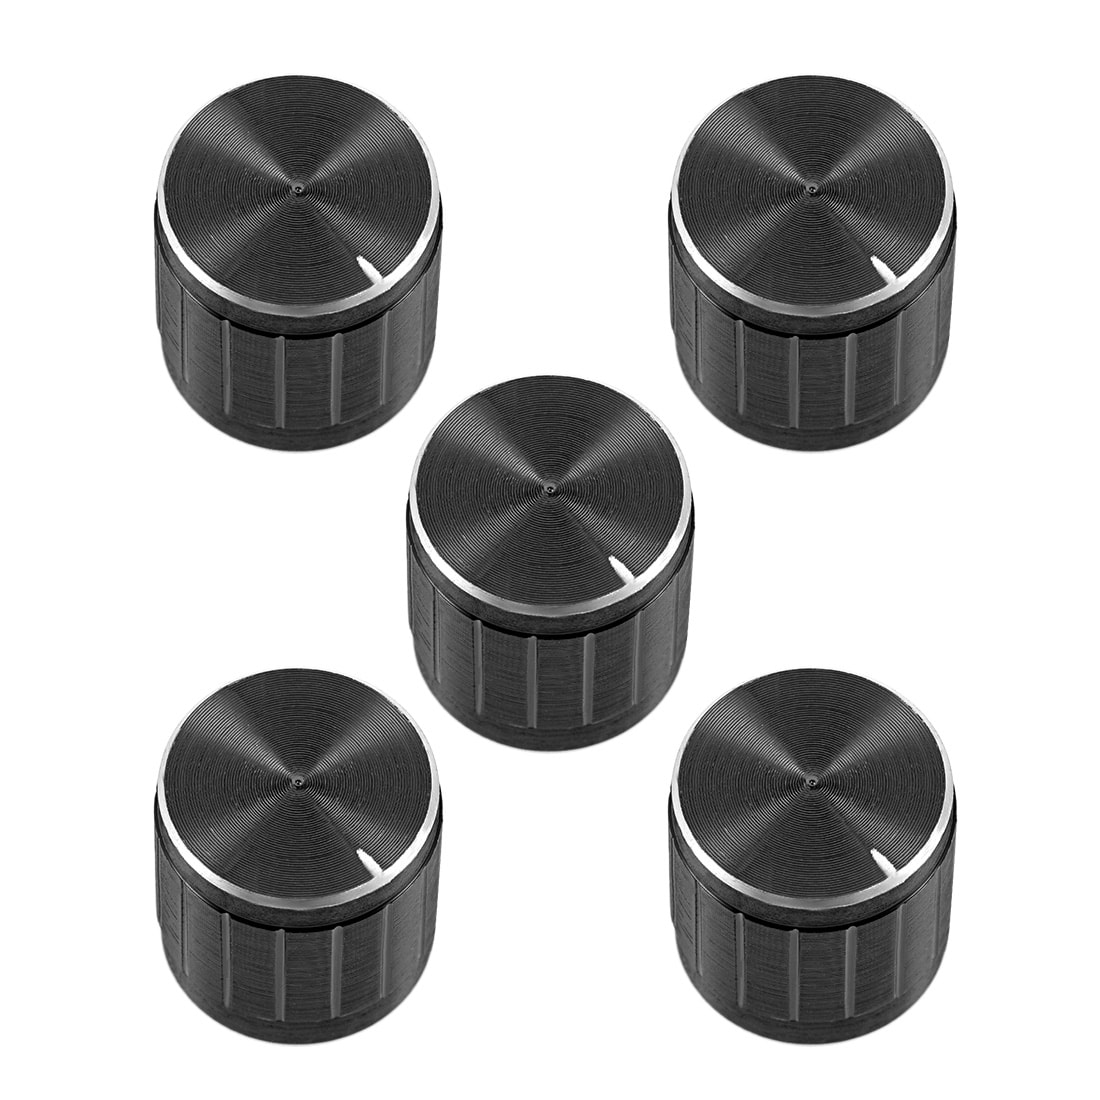 10 Piece Black 6mm OD Shank Rotary Knob Button drehknoepfe Potentiometer E5 2X